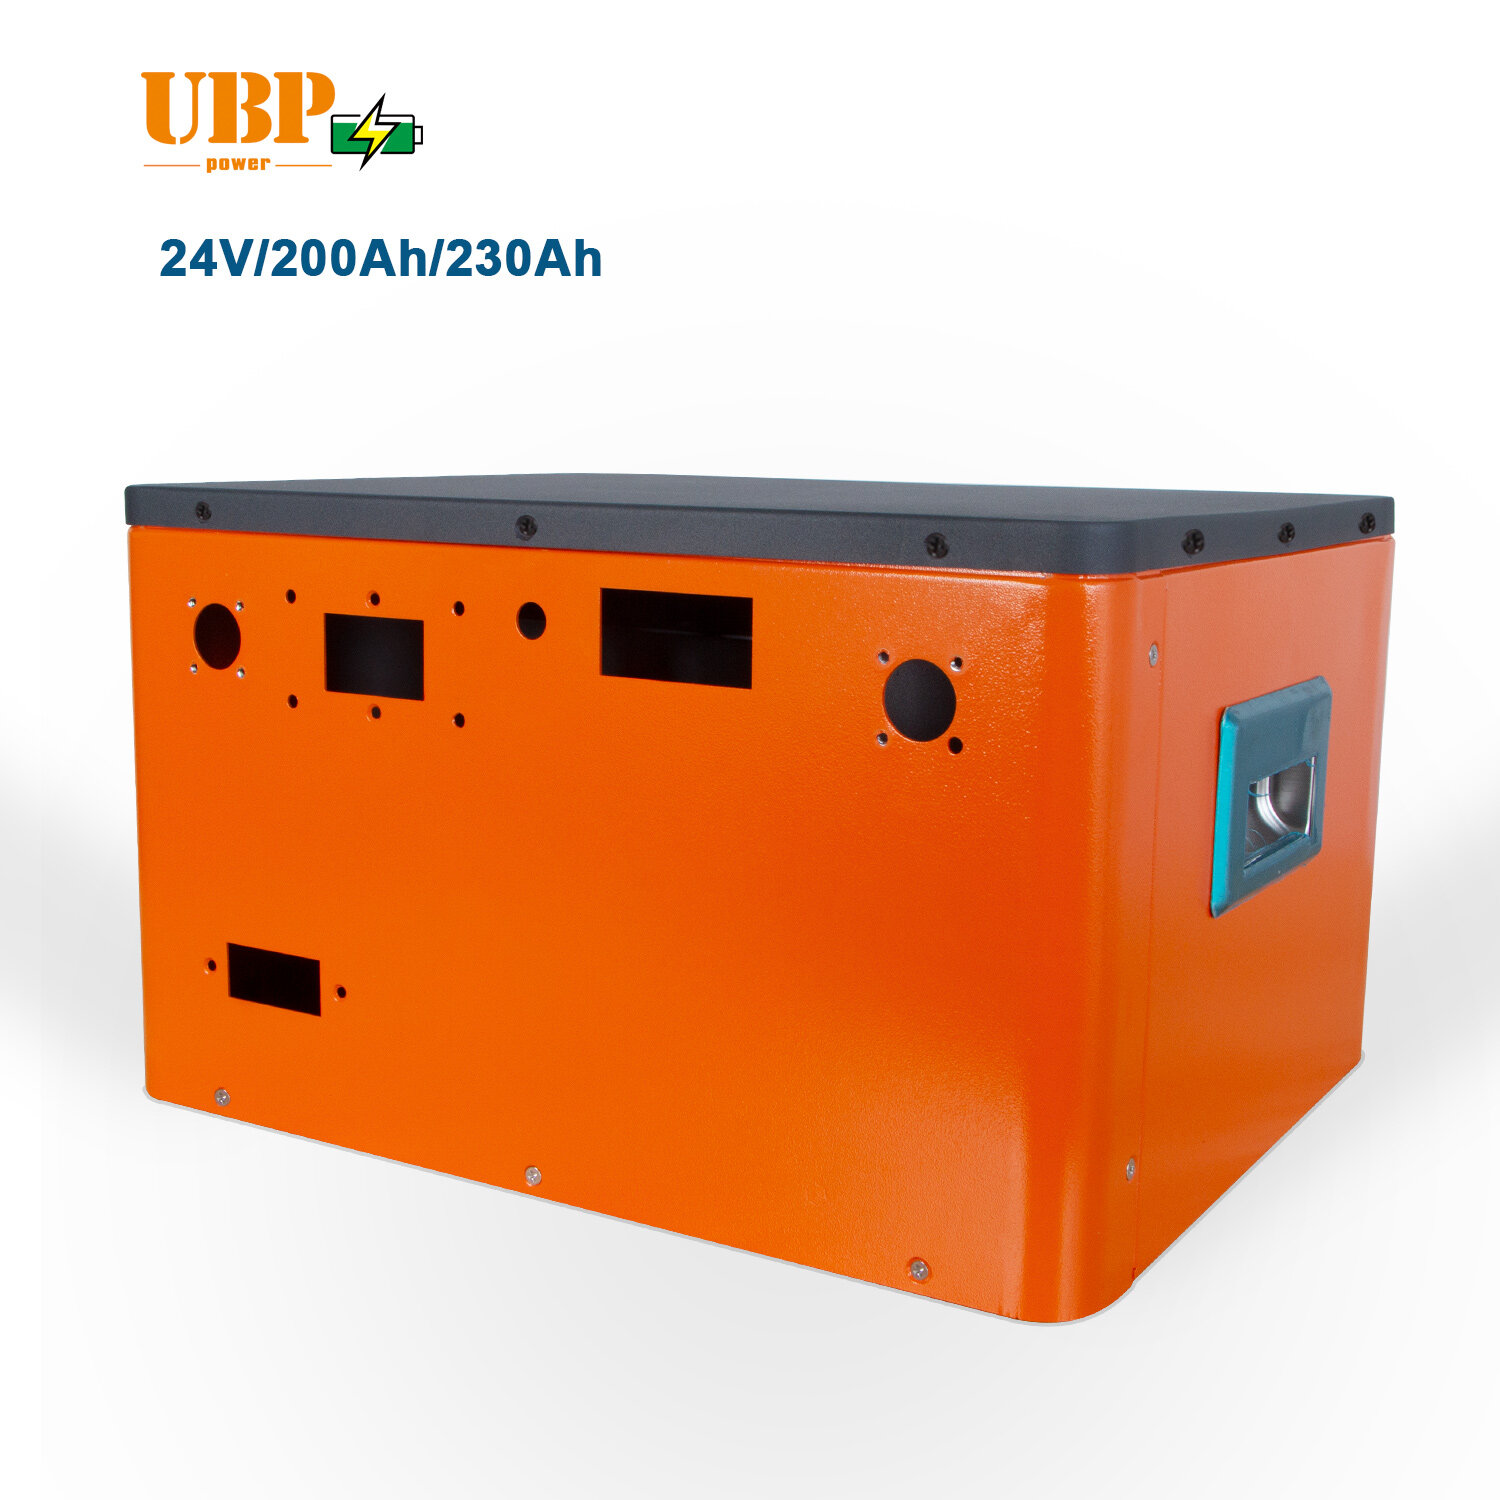 UBPPOWER 24V 200Ah/230Ah LiFePo4 DIY Battery Box Case Kits